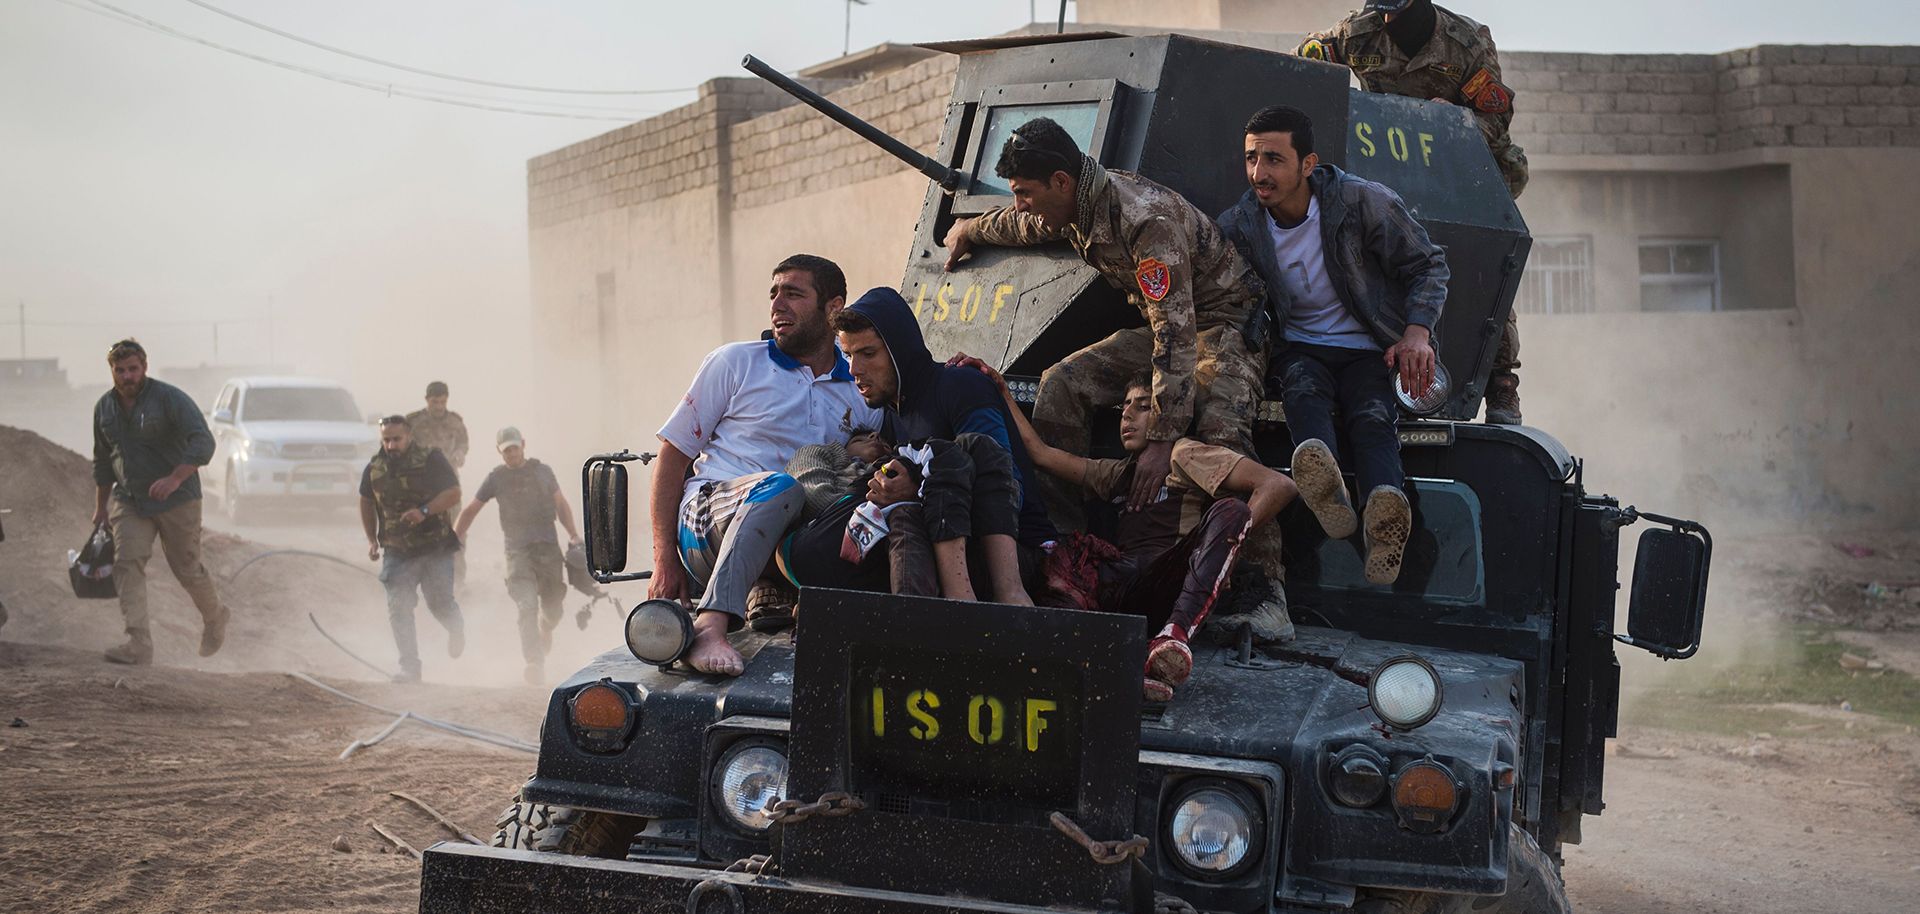 A Deadly Urban Battlefield in Mosul